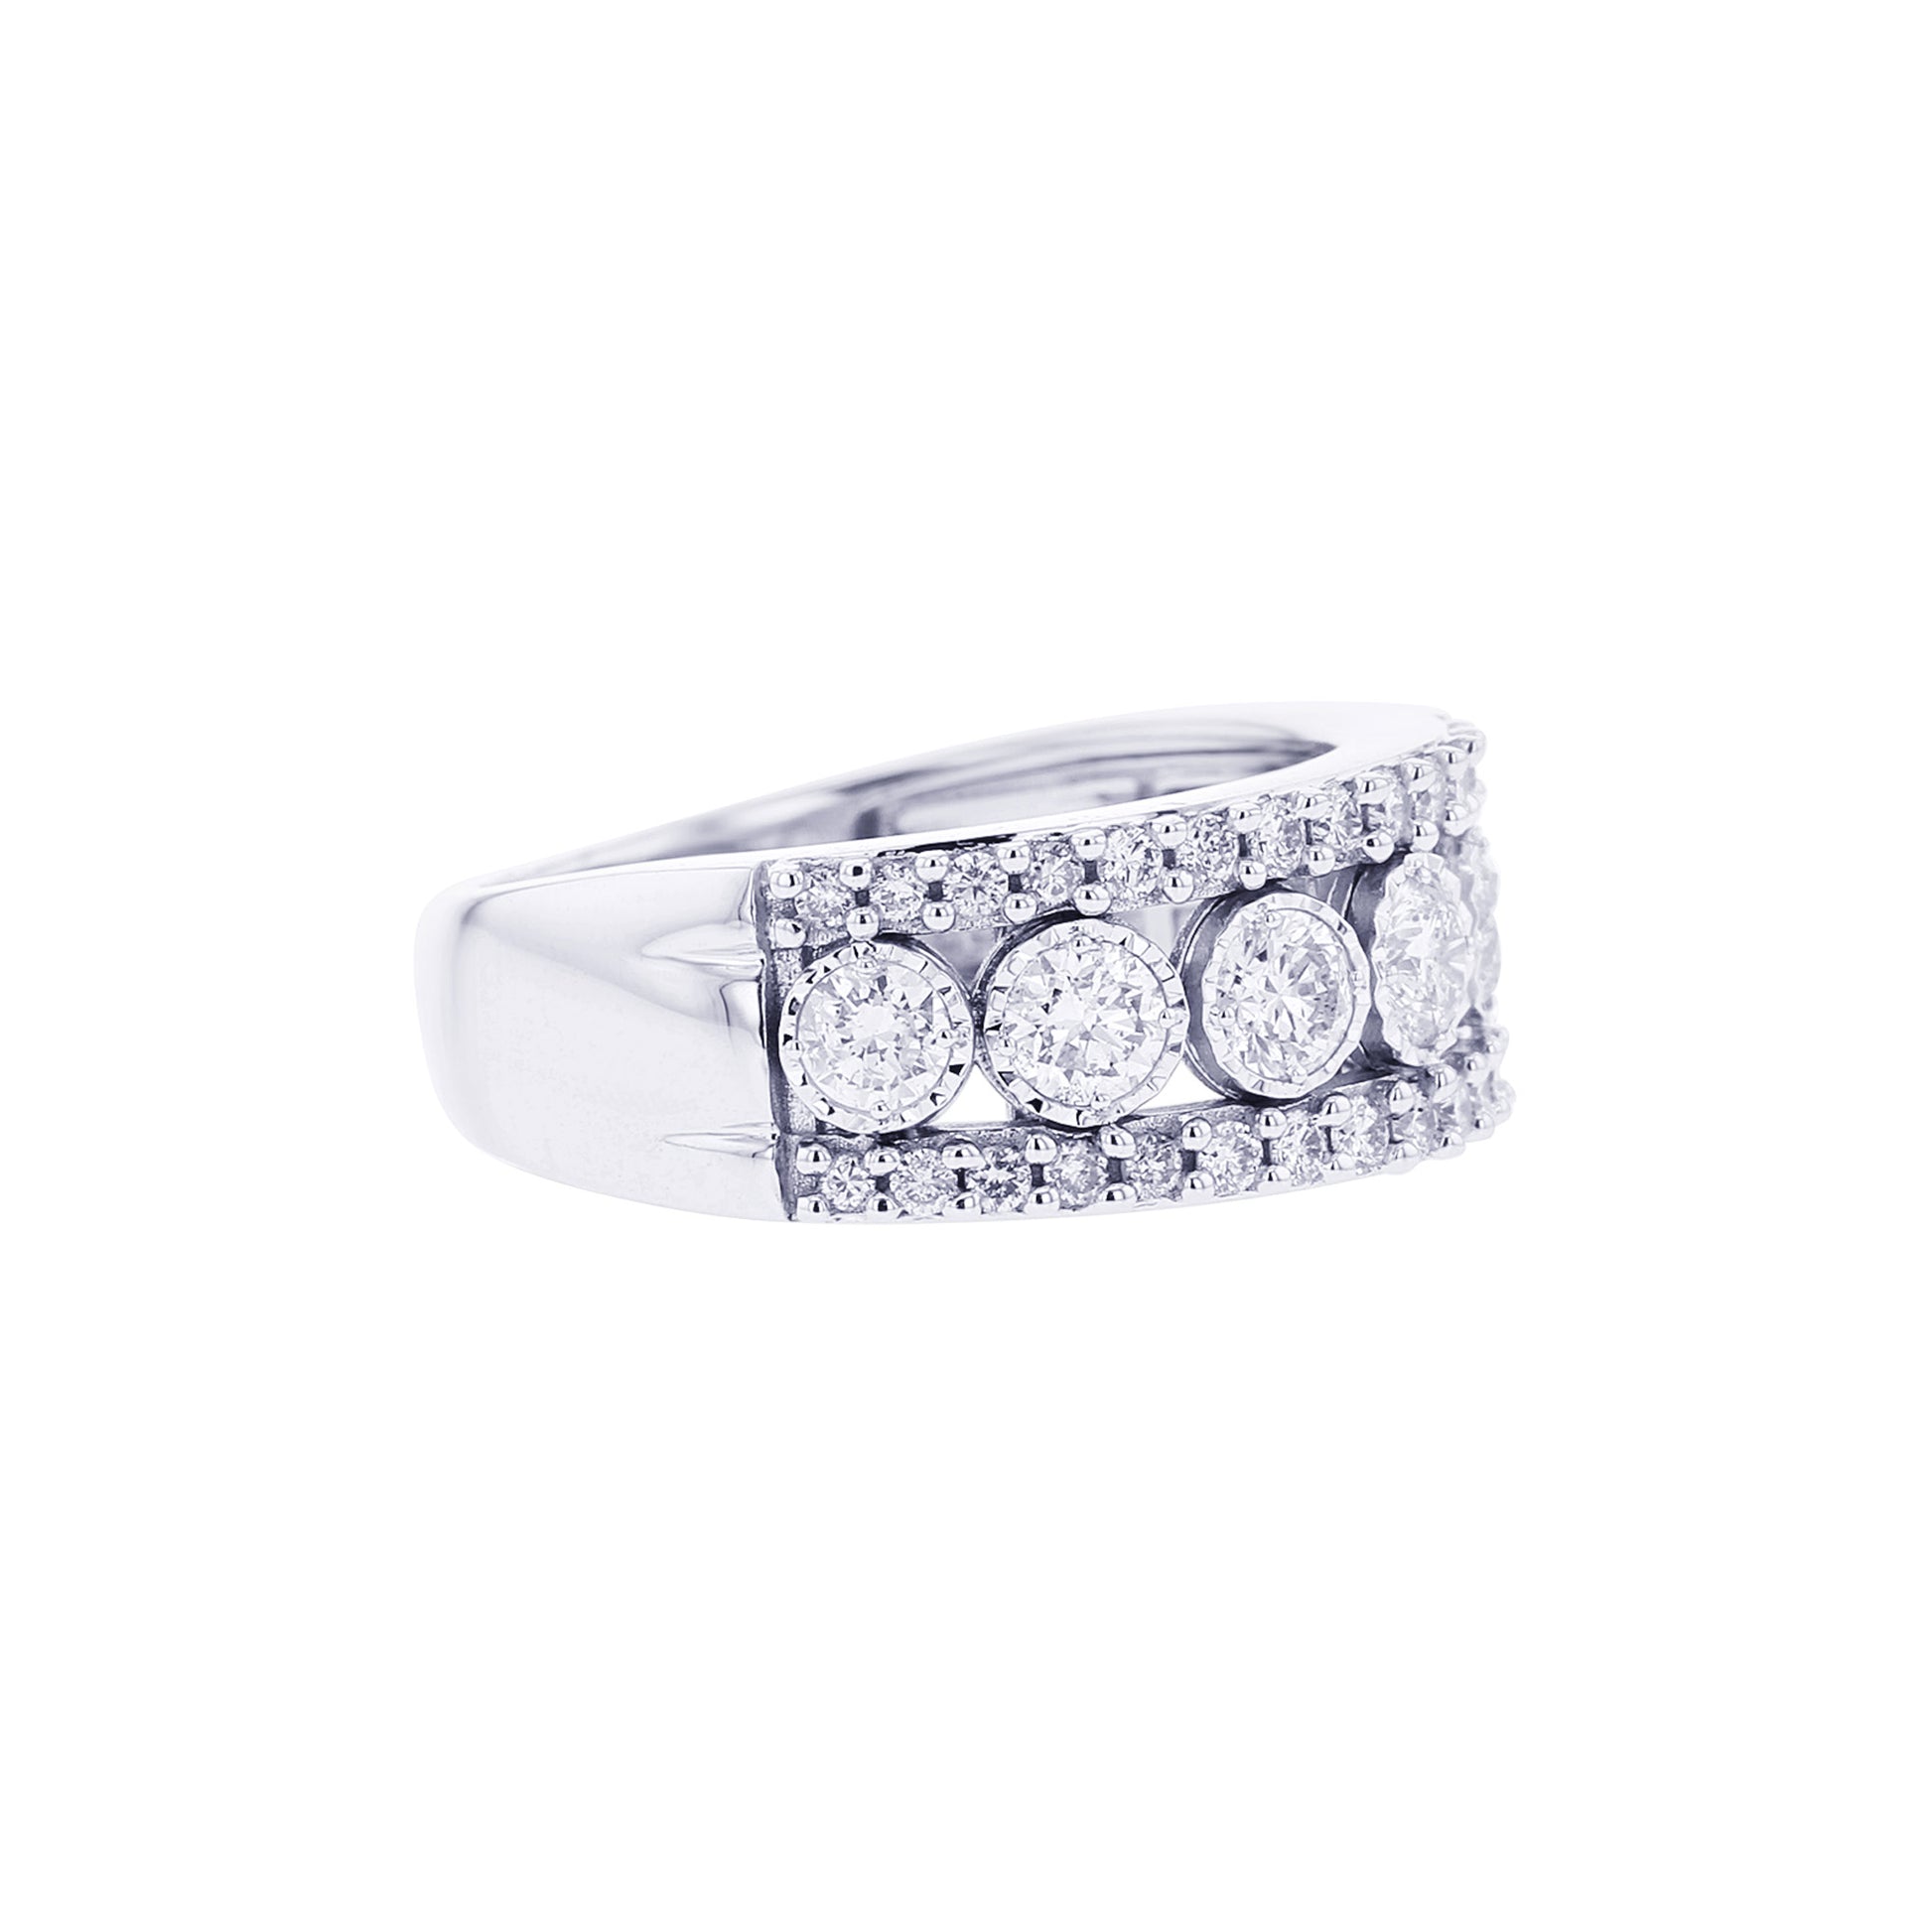 Oasis Mirage Diamond Ring 1ct